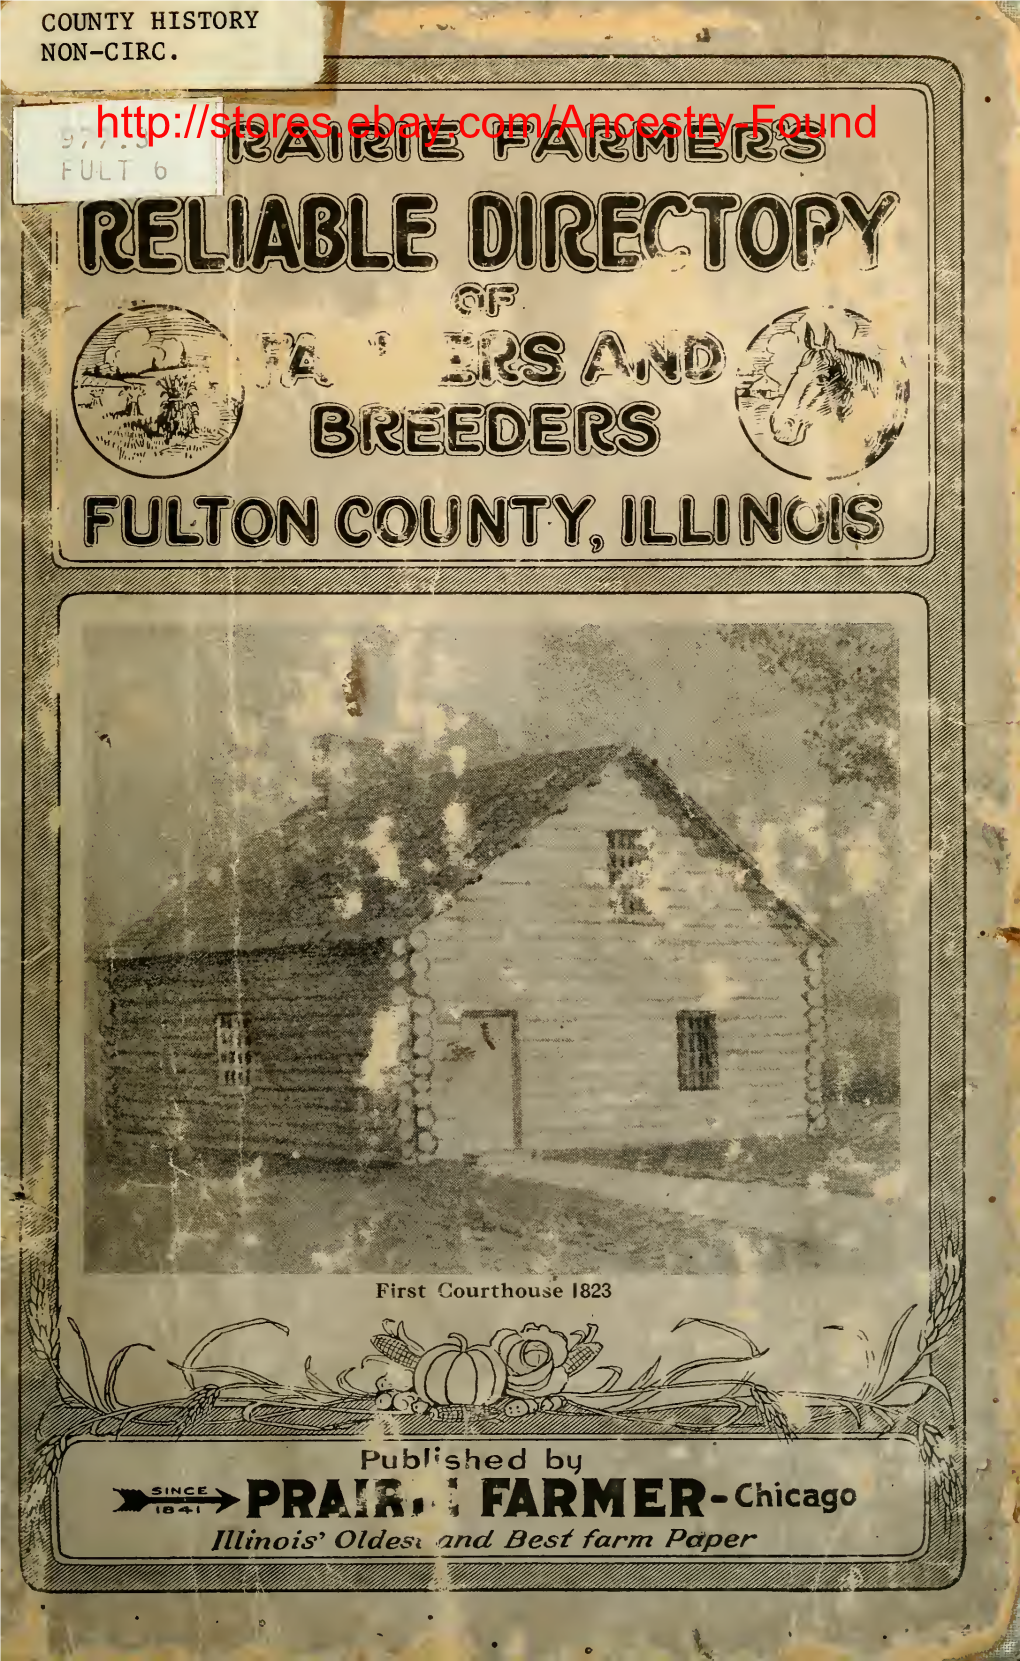 Prairie Farmers Directory of Fulton County, Illinois, 1917